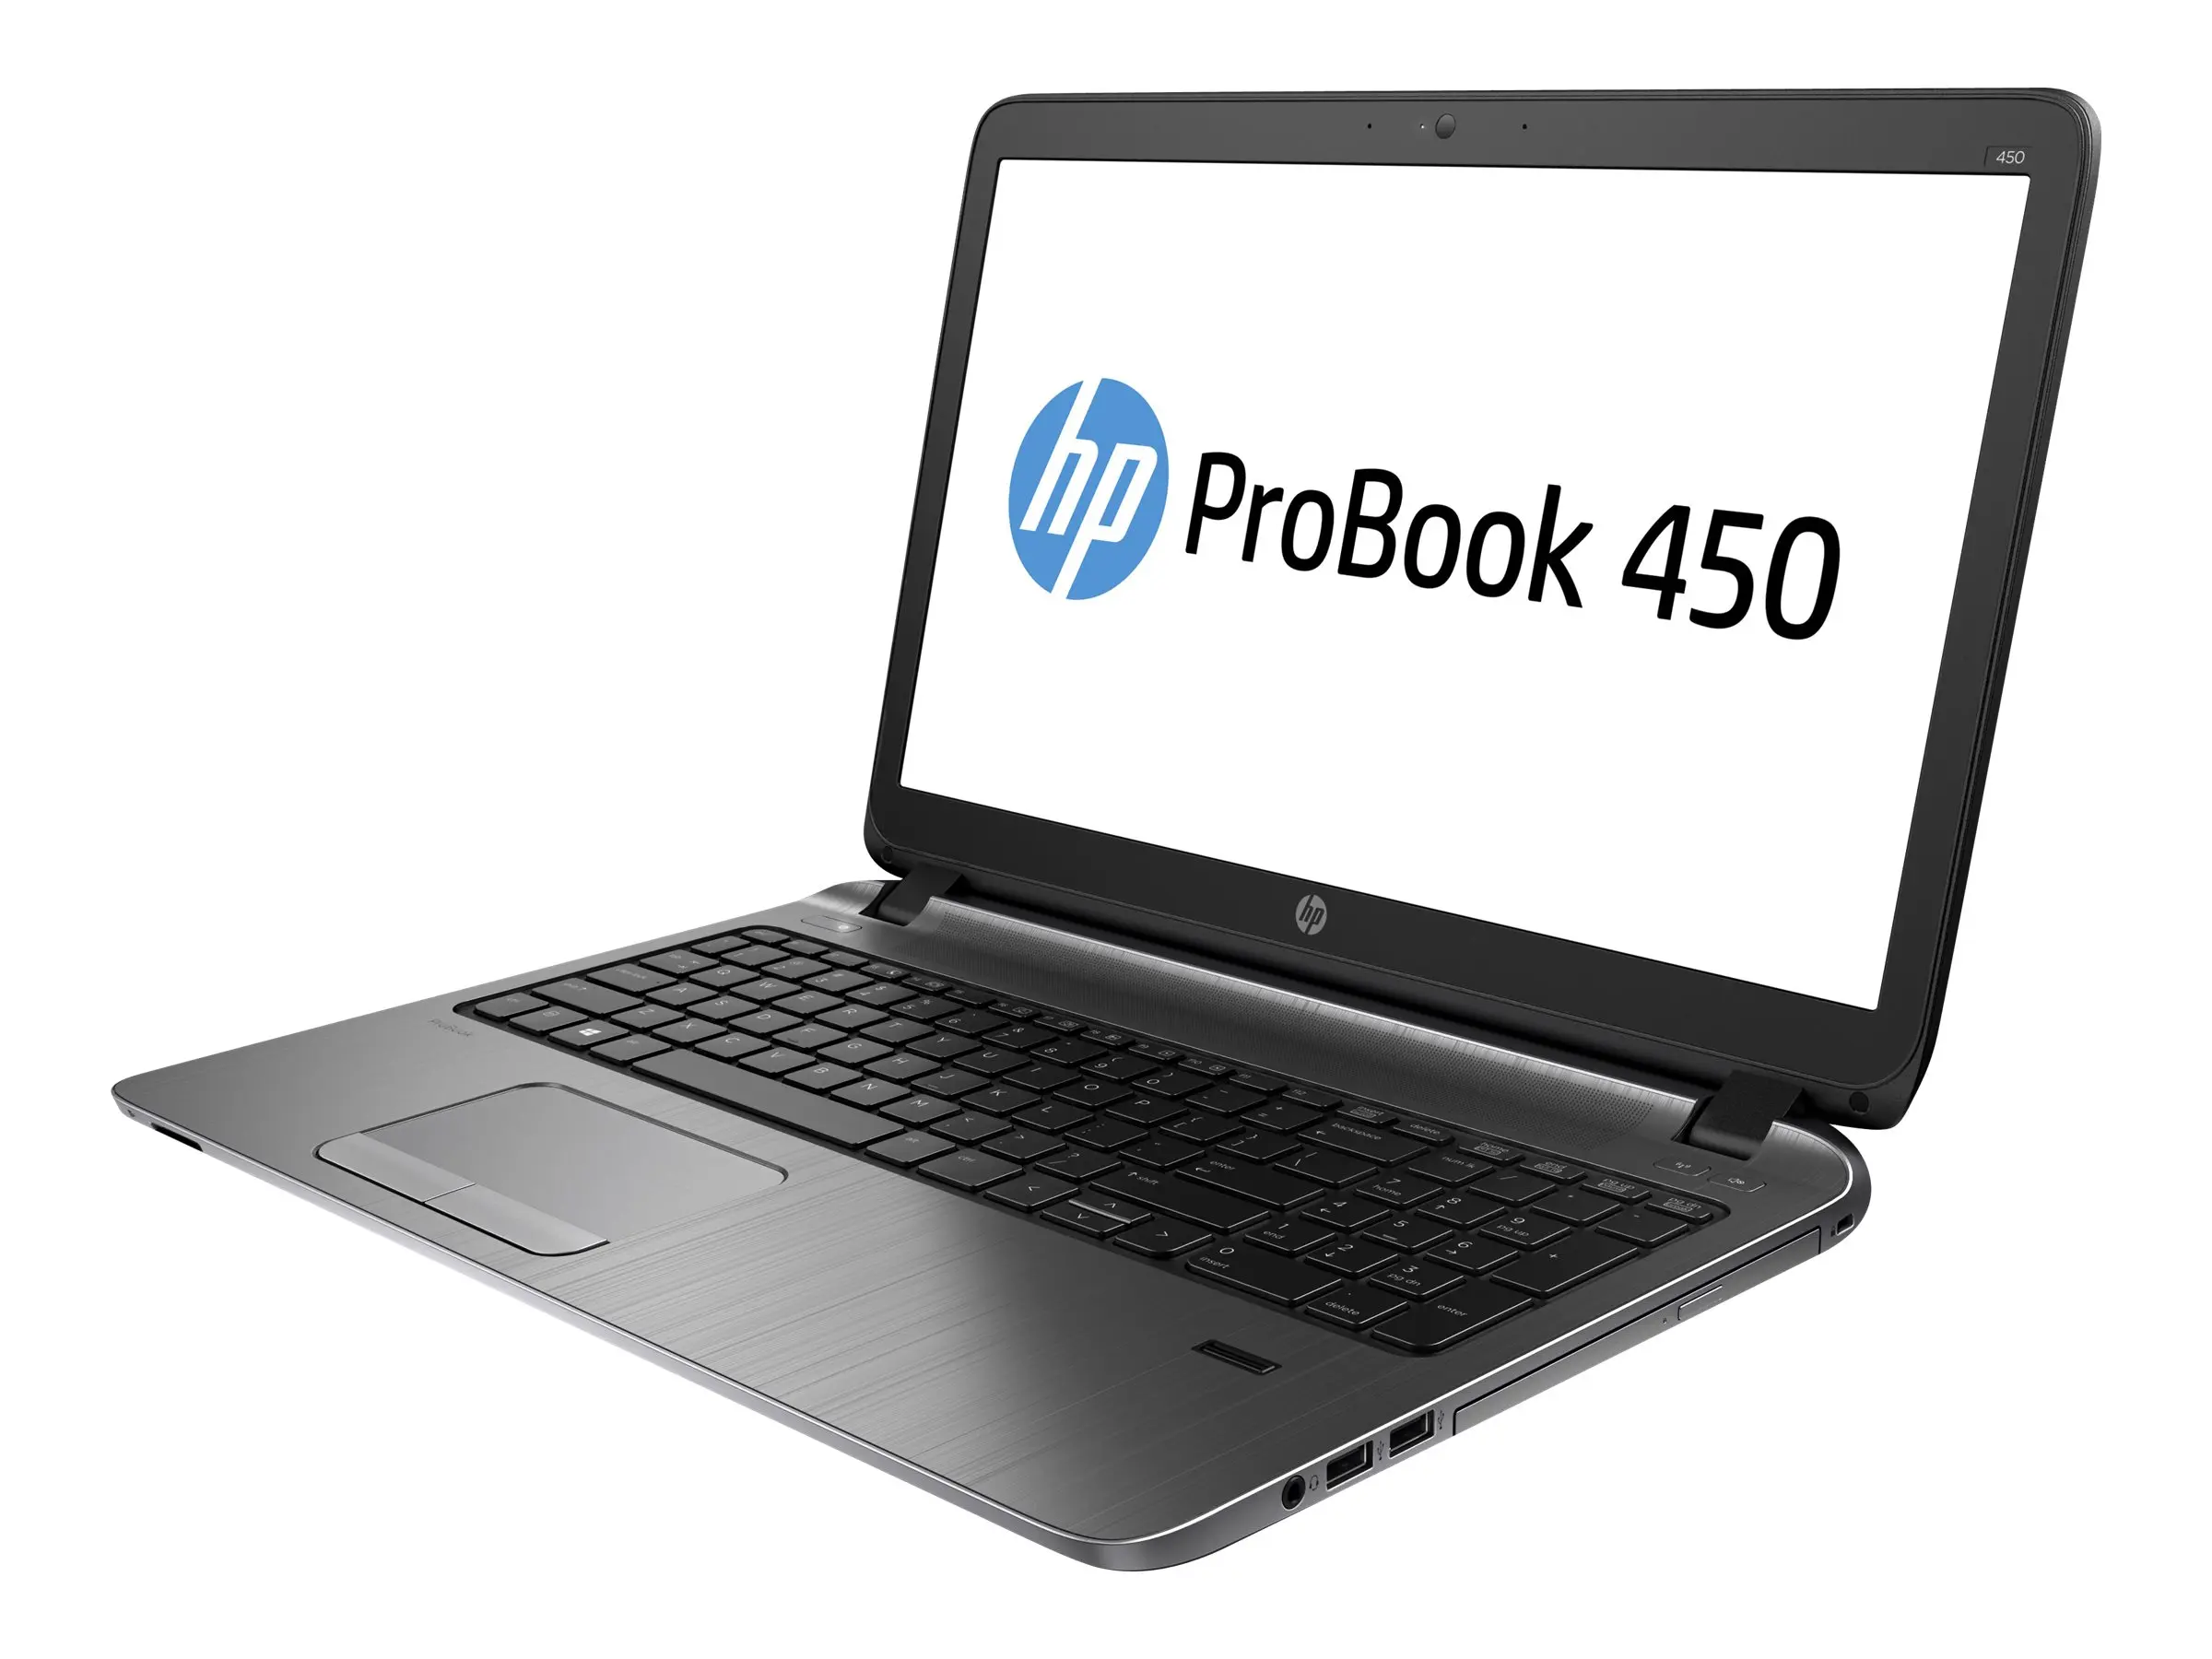 hewlett packard probook 450 g2 - What generation is the HP ProBook 450 G2